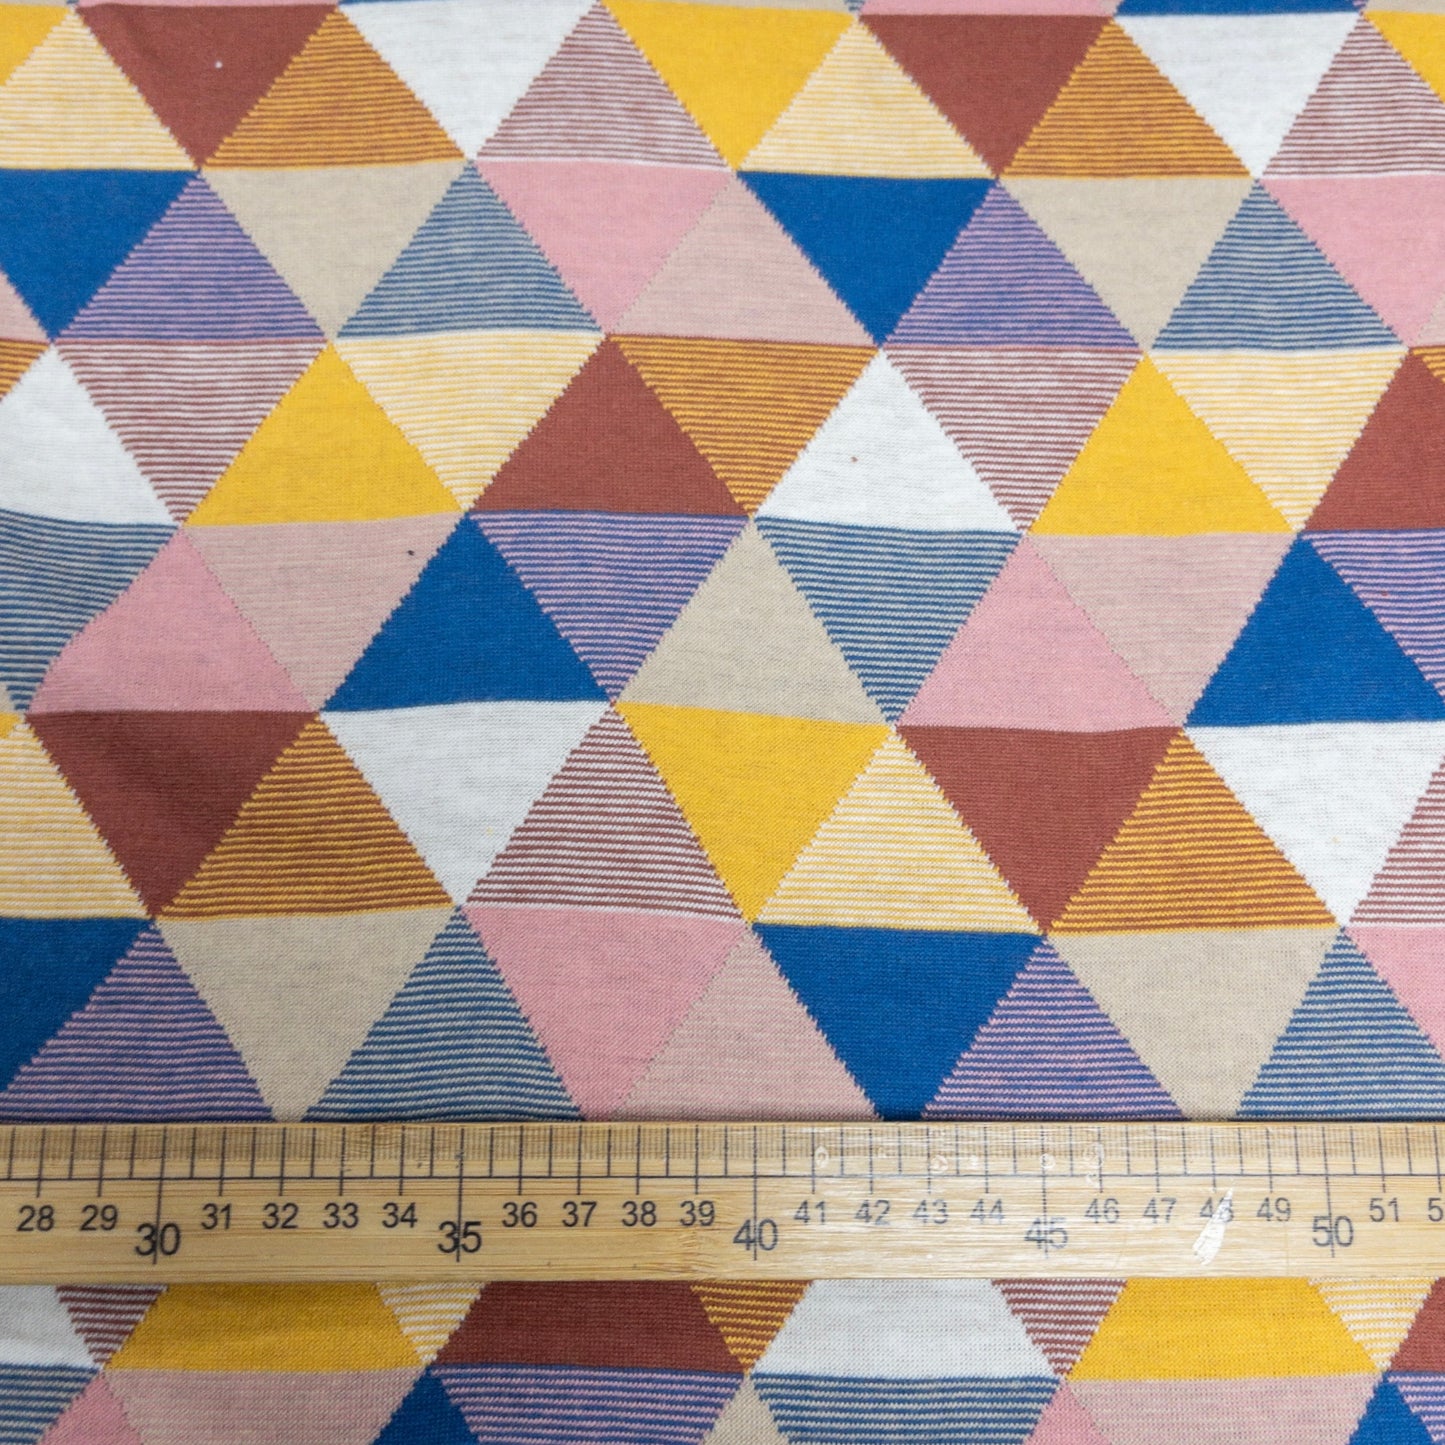 maffon | triangle patterns beige pink blue yellow 三角拼色 米粉藍黃 | cotton jacquard knit 雙面純棉提花針織 - 170cm